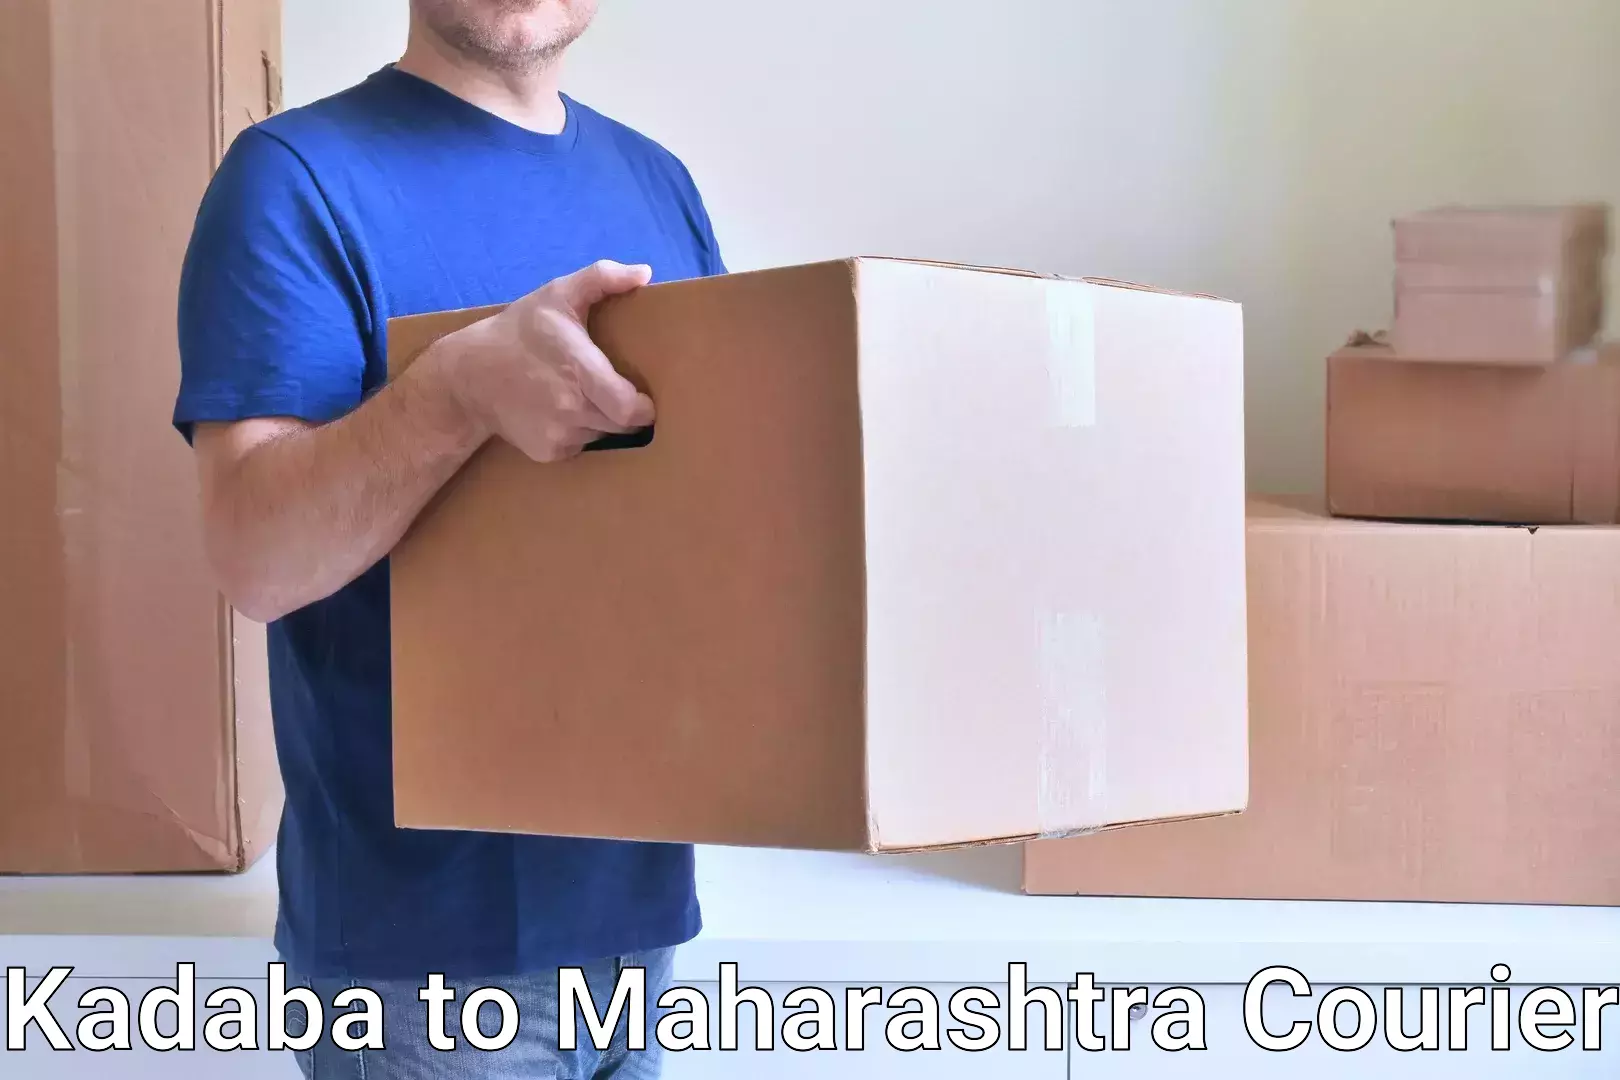 Door-to-door freight service Kadaba to Maharashtra